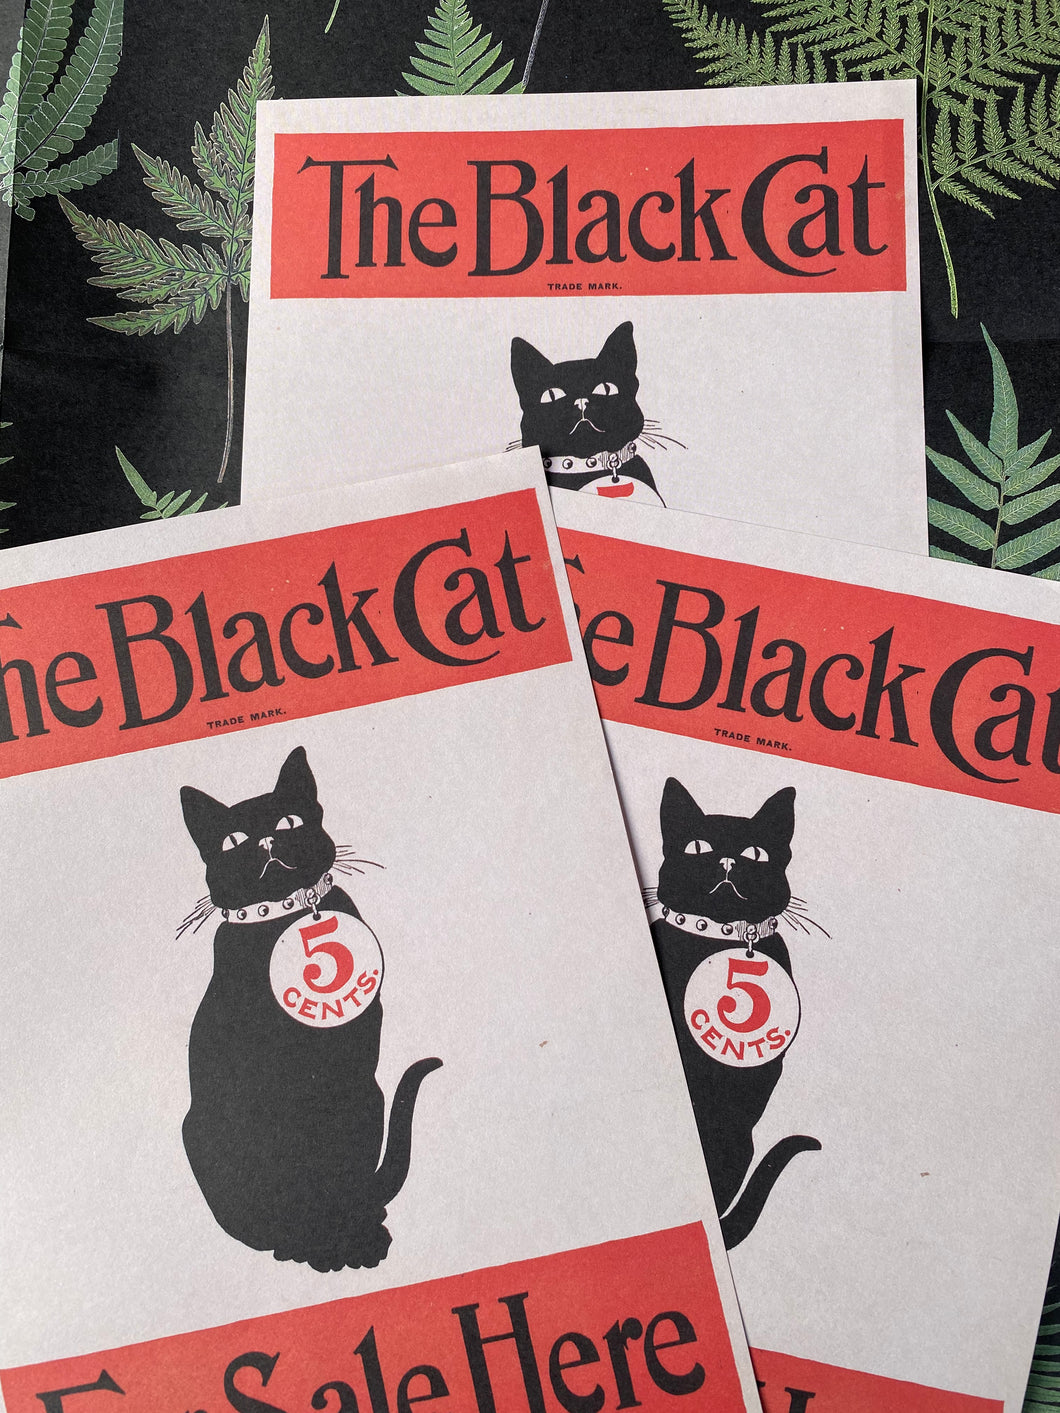 The Black cat letter sheets